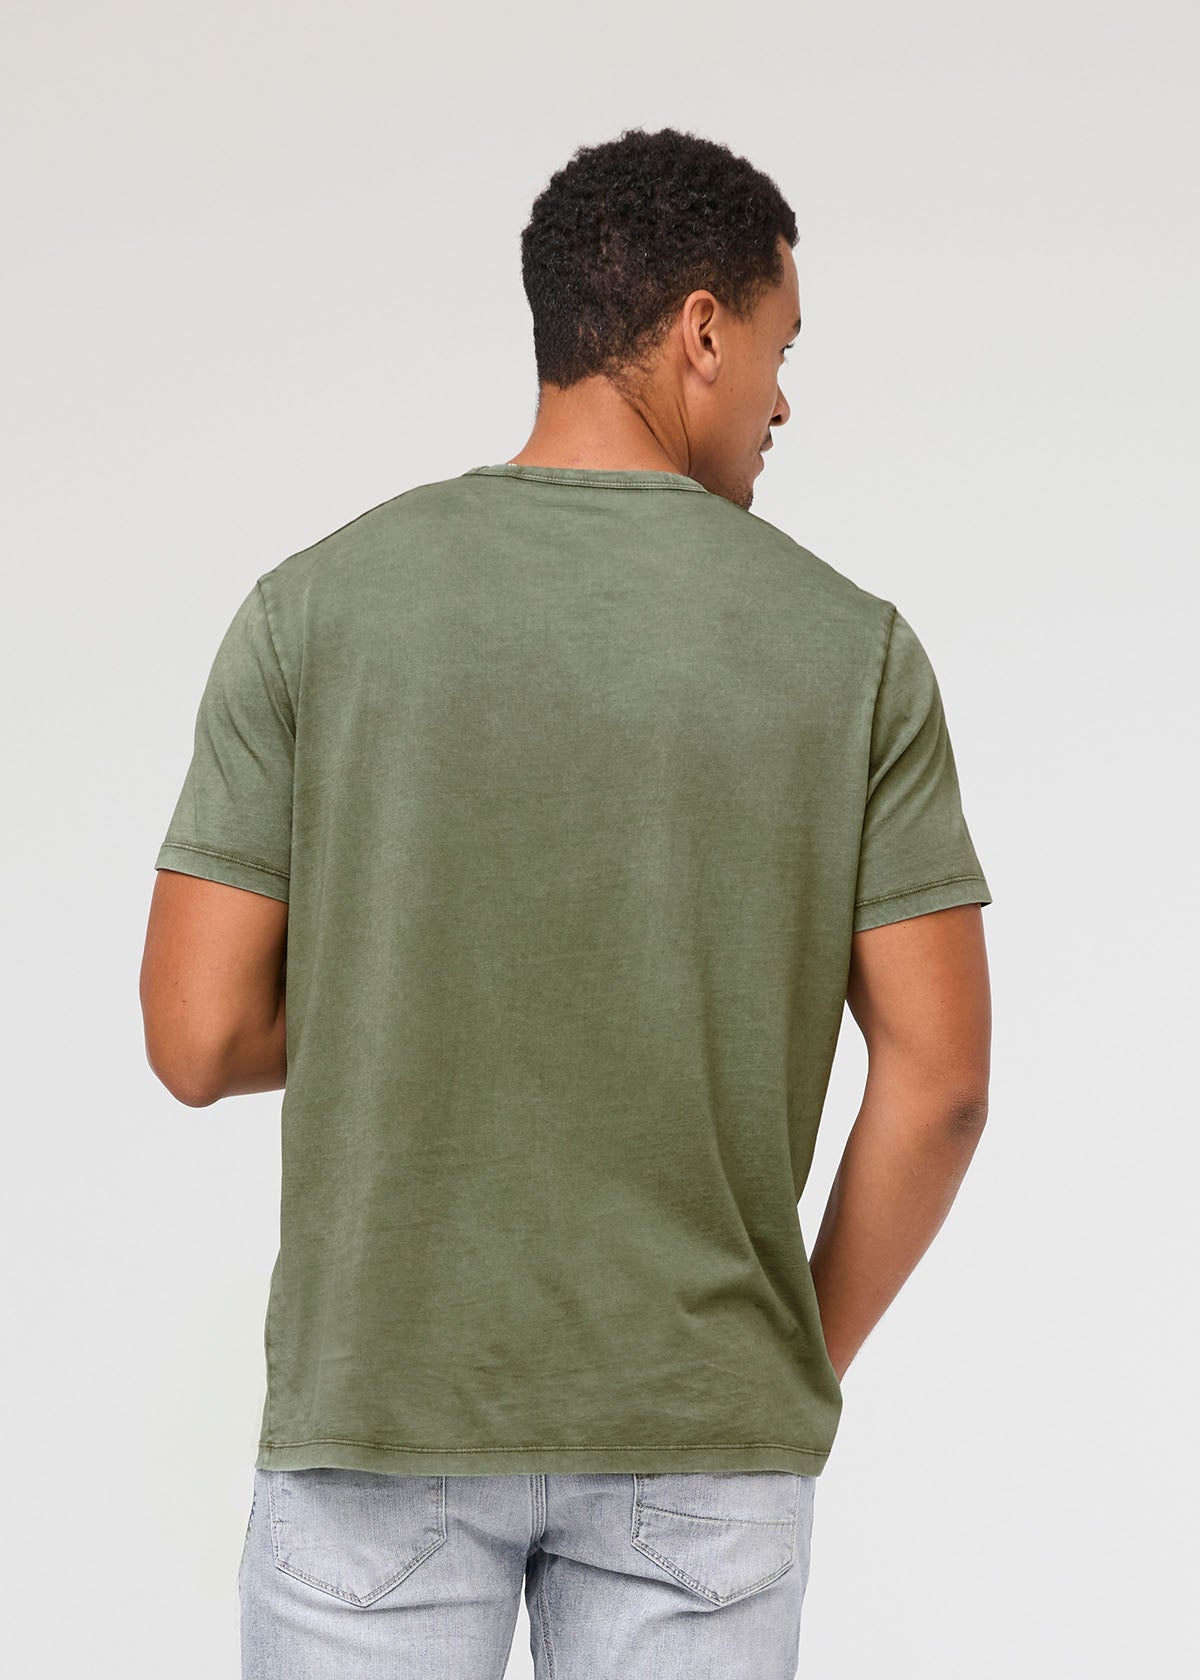 mens pima cotton vintage style green t-shirt back